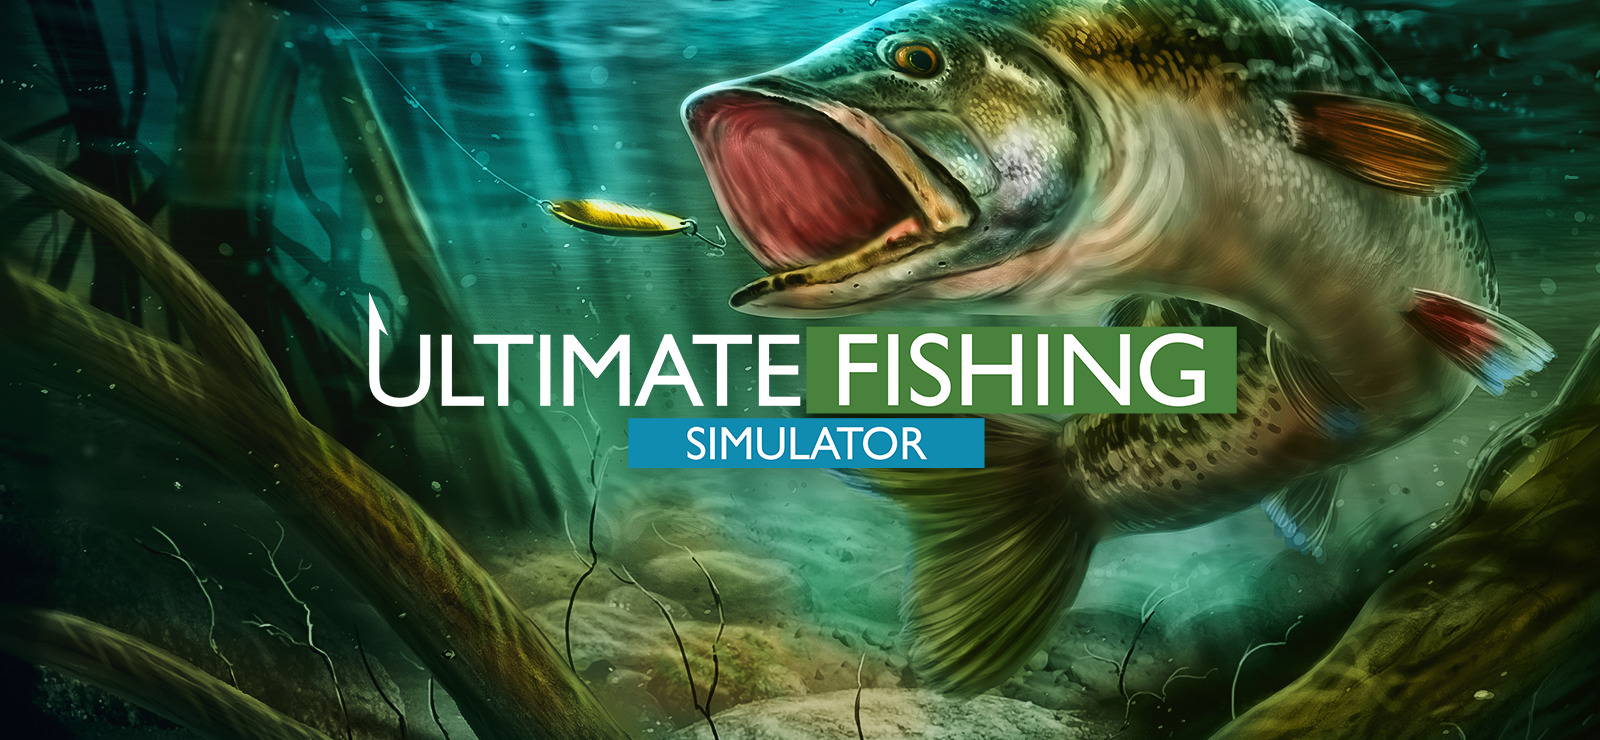 Ultimate Fishing Simulator Free Download DRMFree GoG PC Games